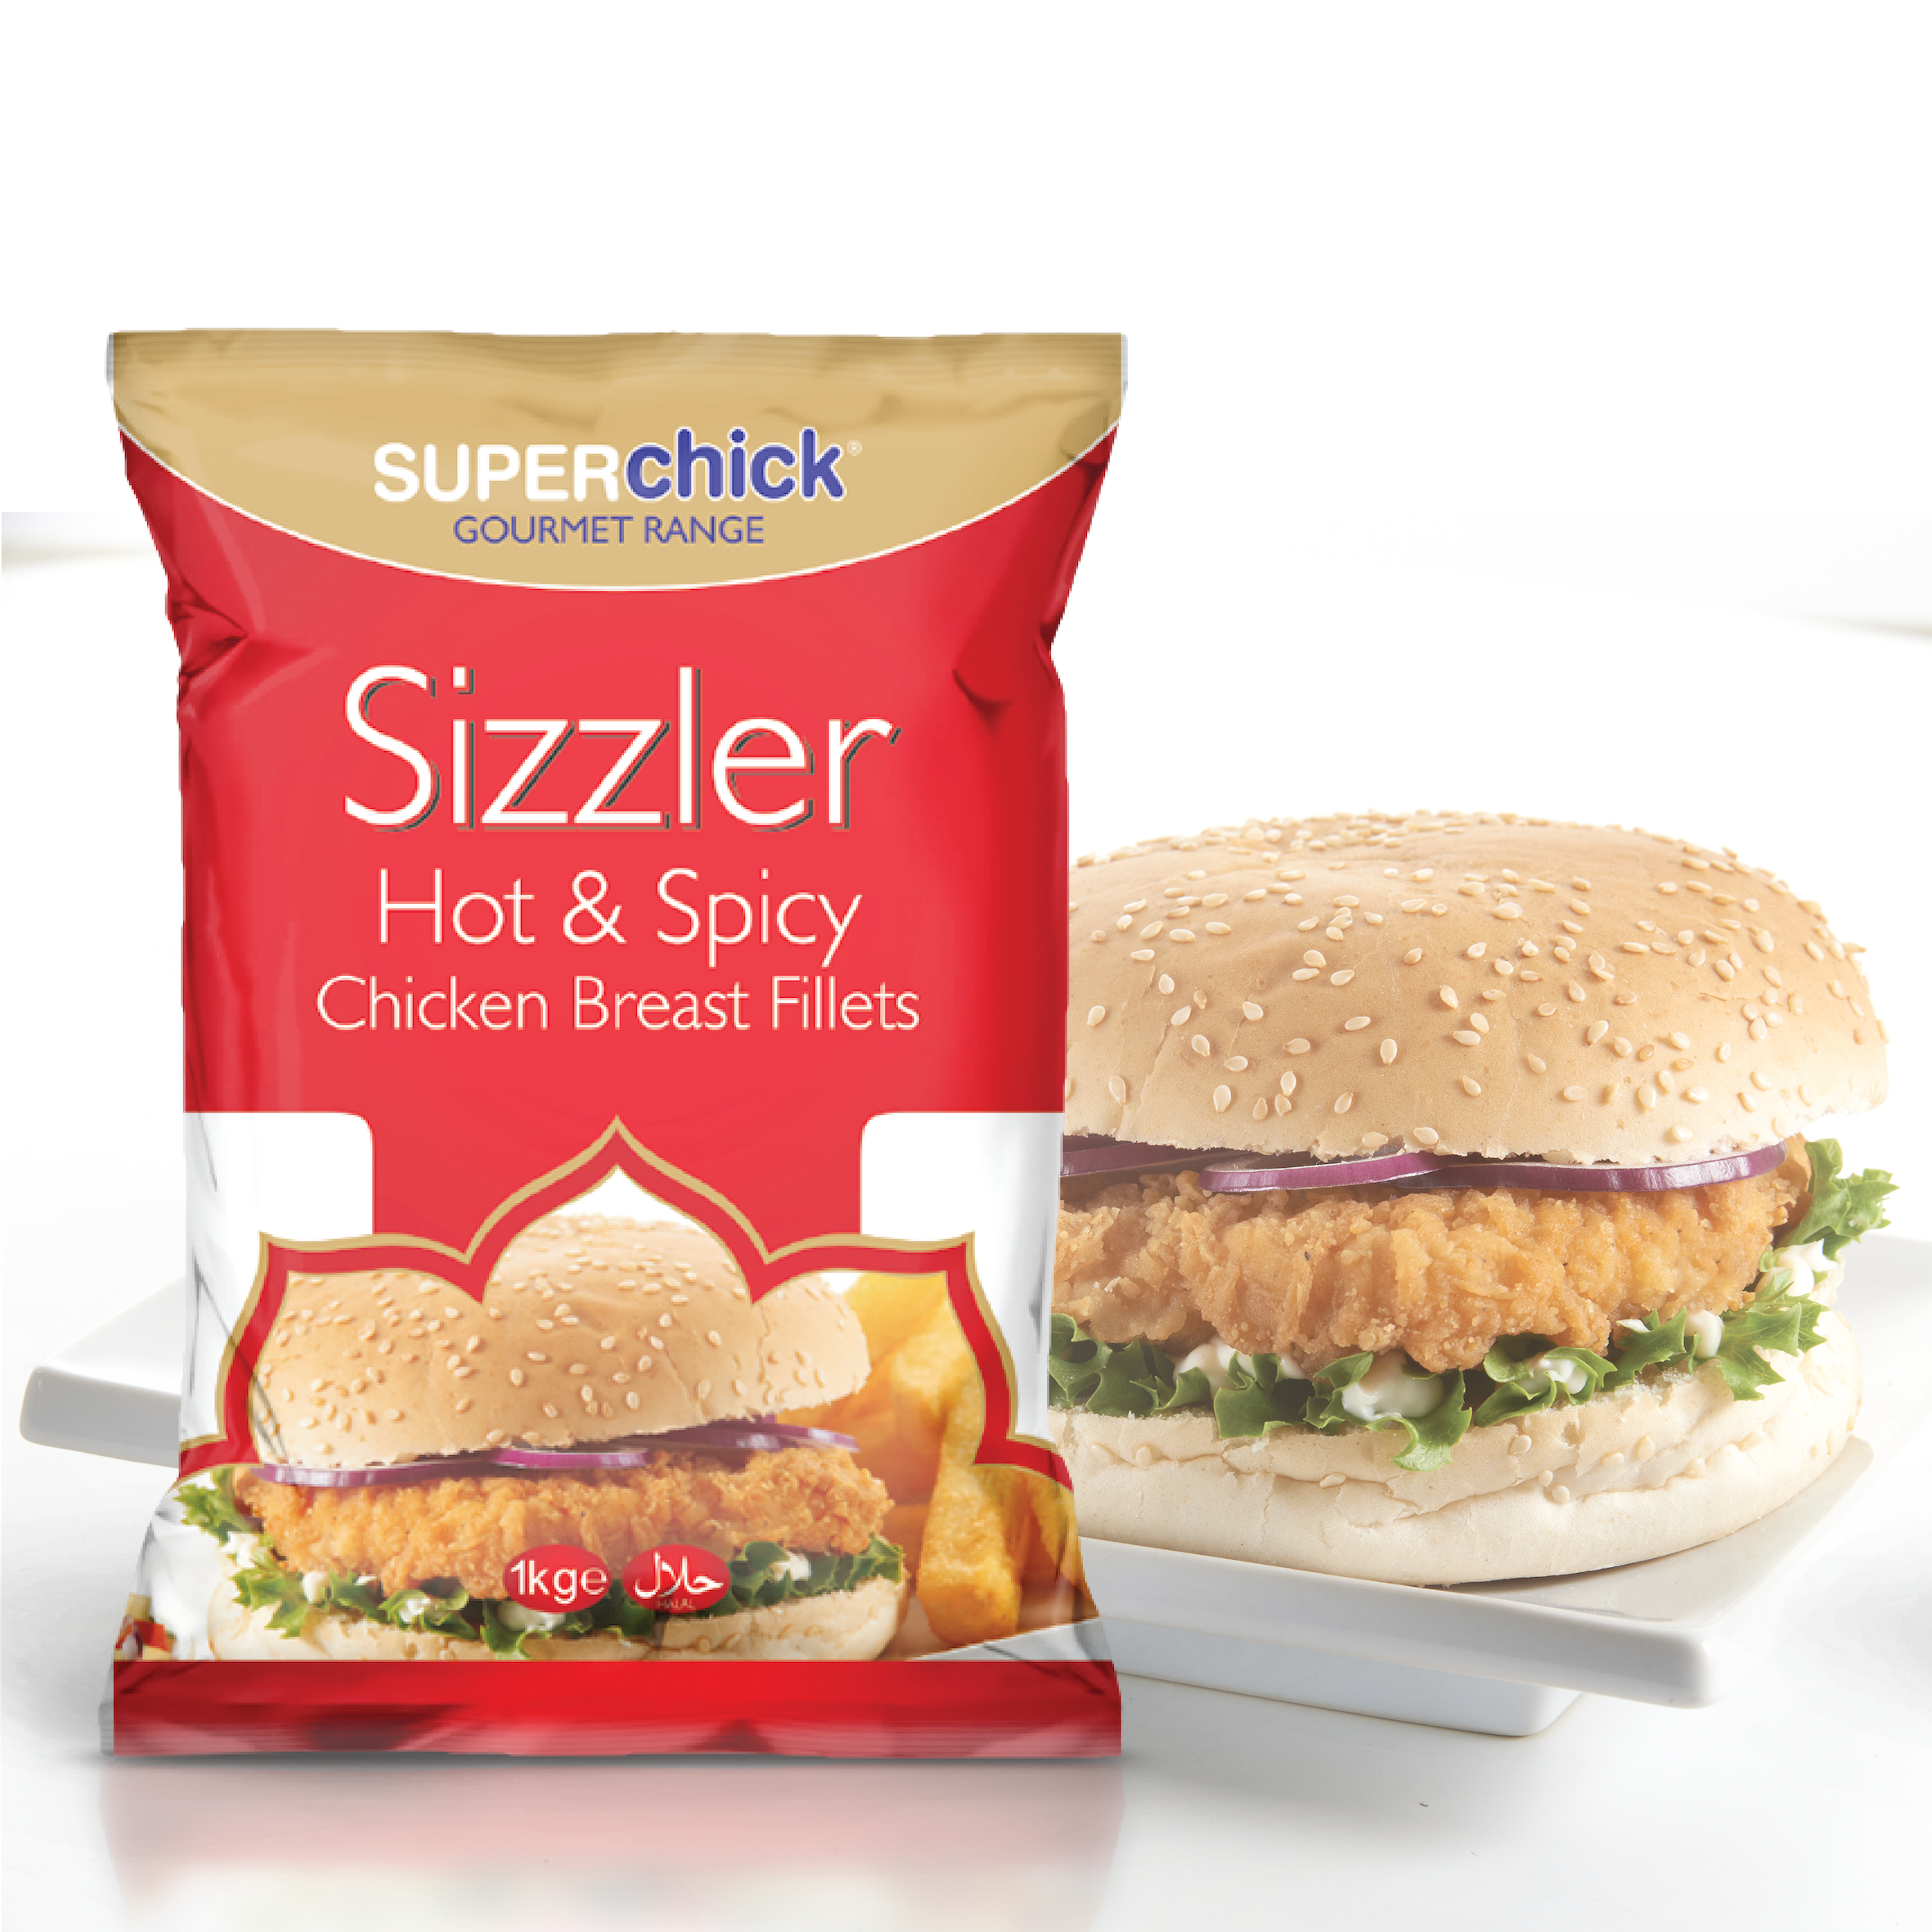 Superchick Sizzler Hot & Spicy Chicken Fillet Burgers (1kg) - The Halal Food Shop